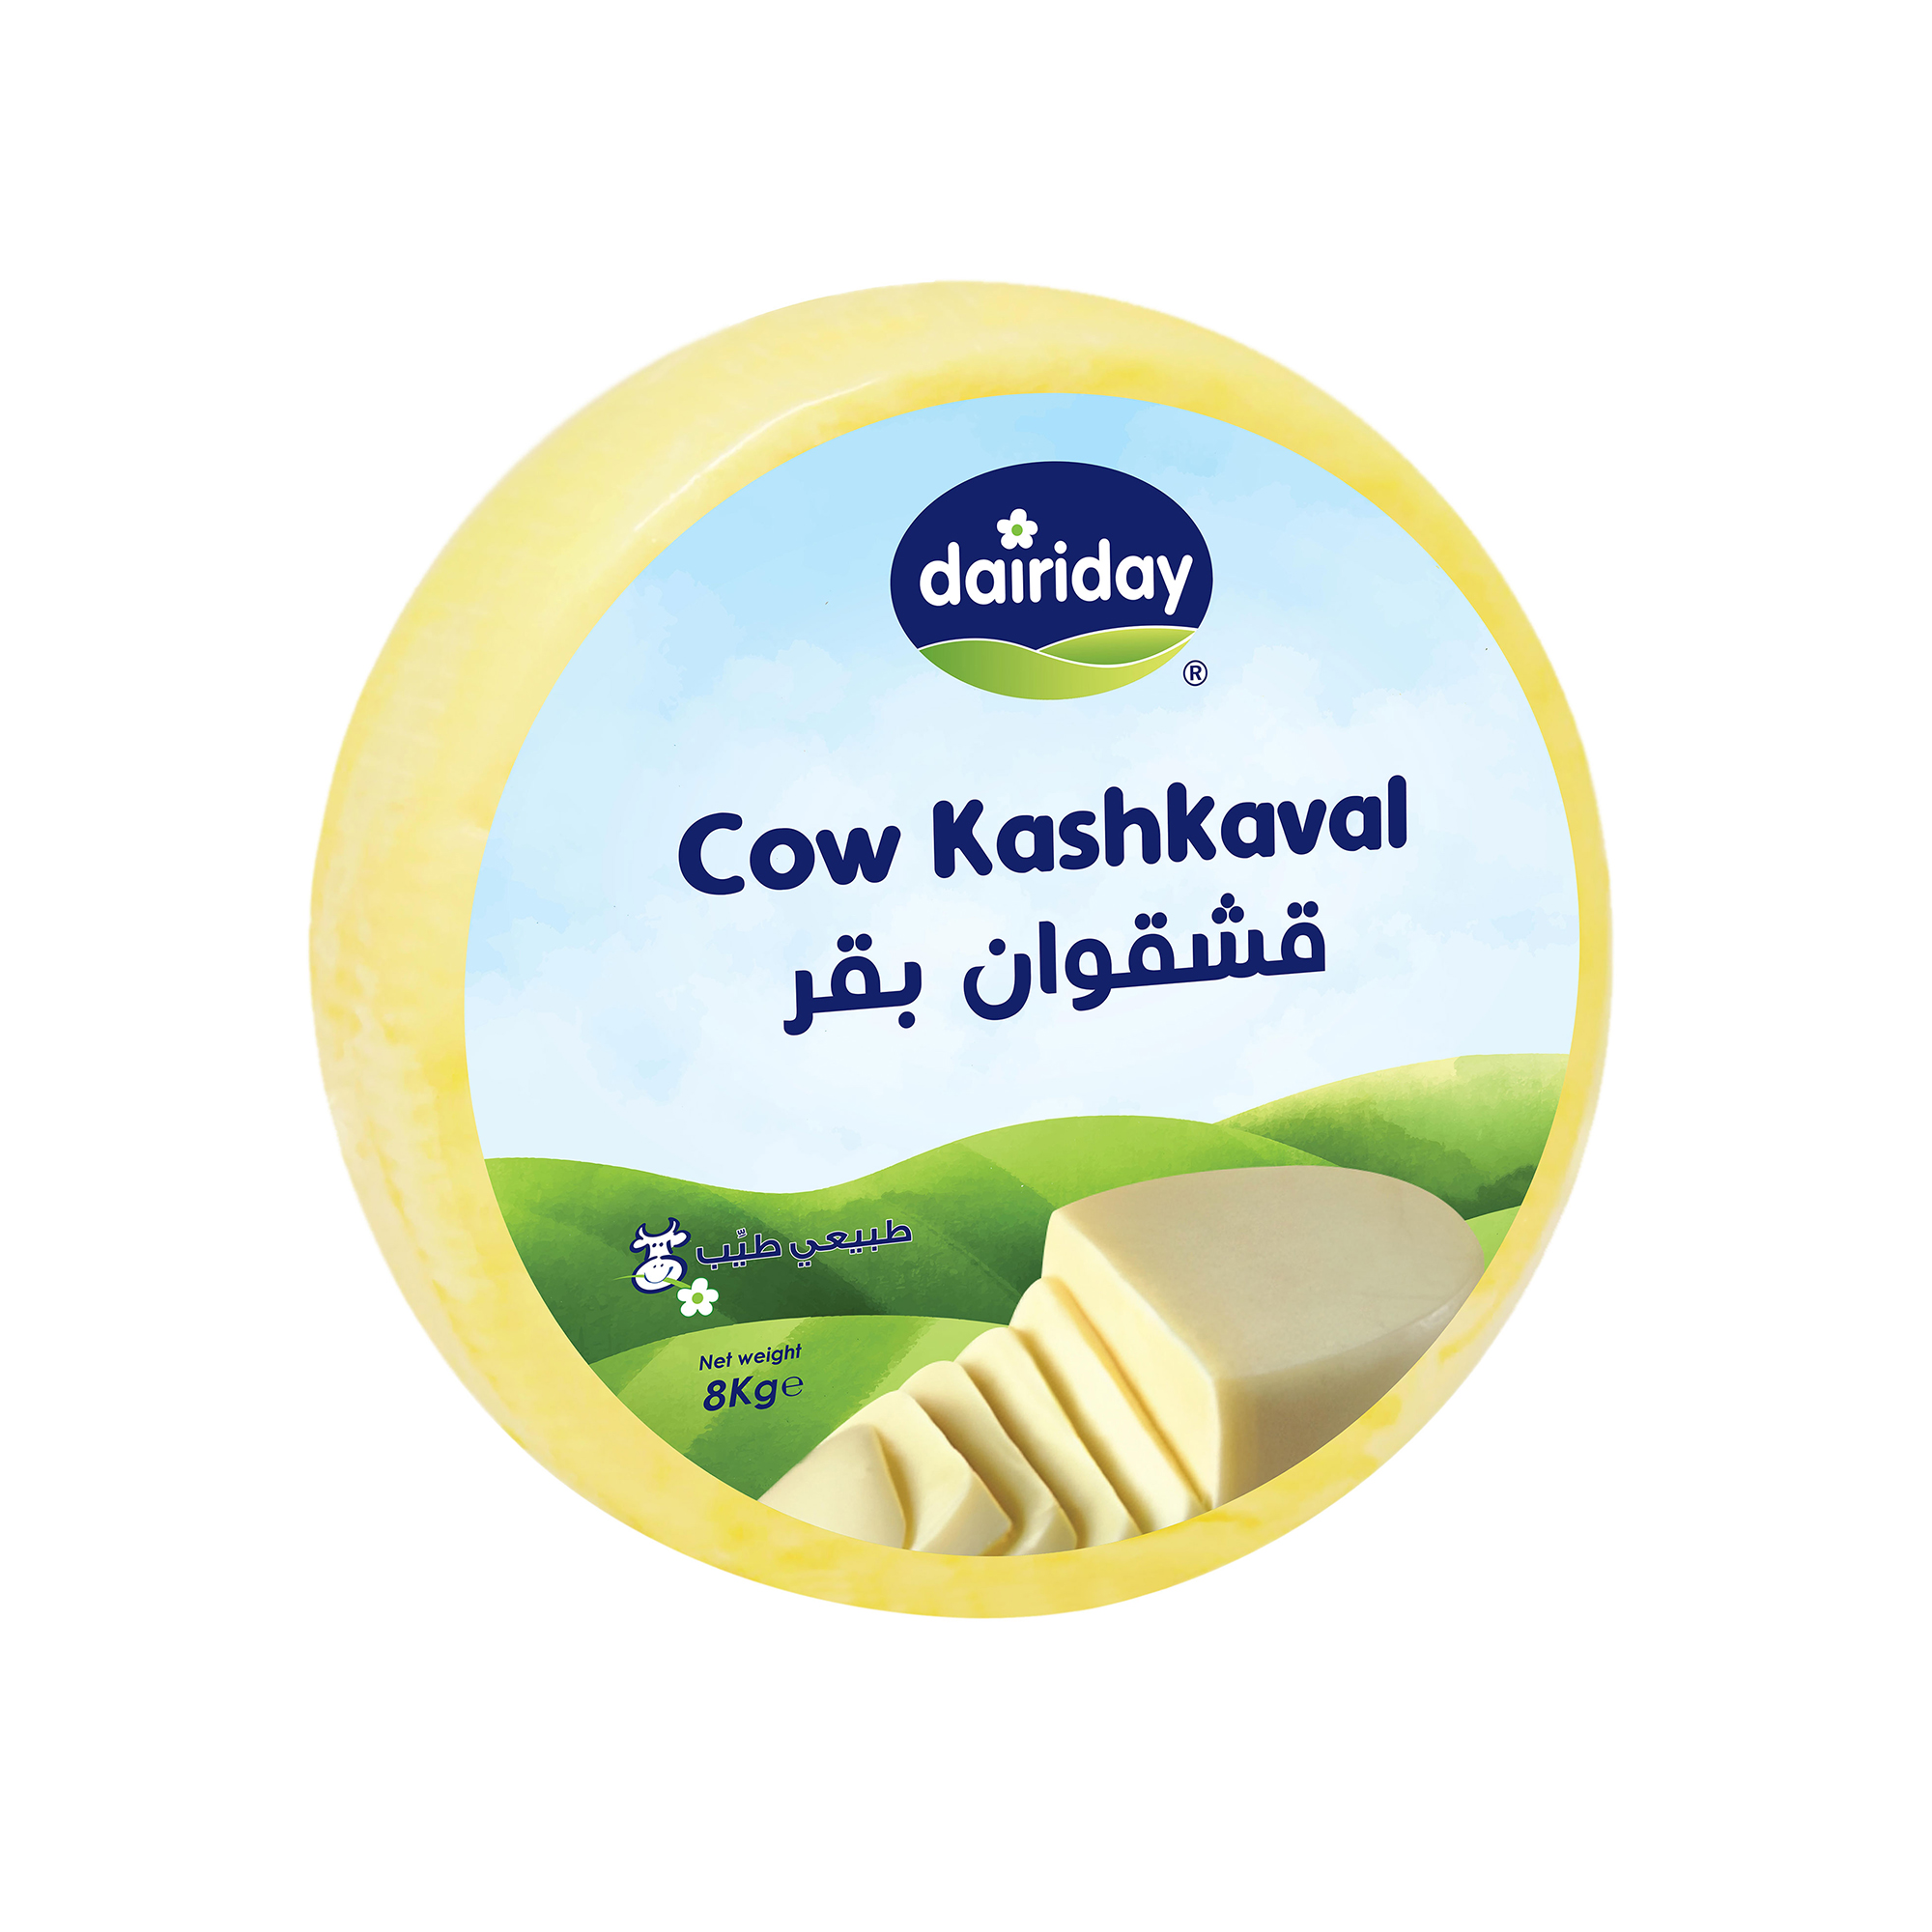 Dairiday-Cow-Kashkaval-8kg-cheese